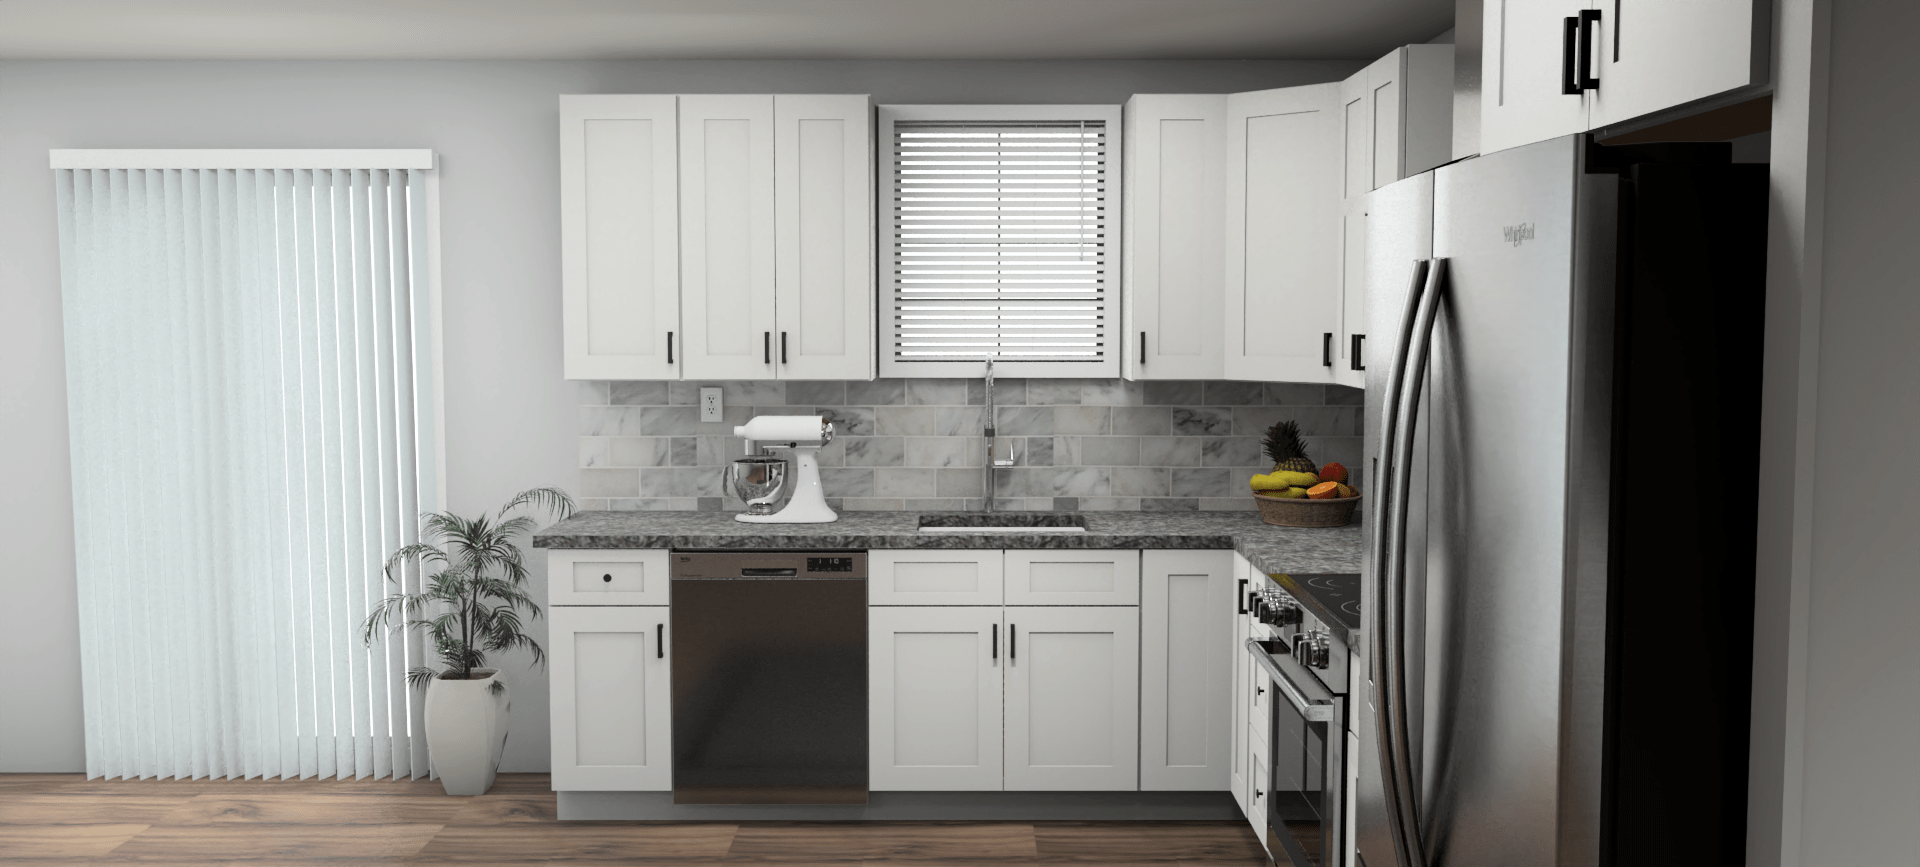 Fabuwood Allure Galaxy Frost 9 x 13 L Shaped Kitchen Side Layout Photo